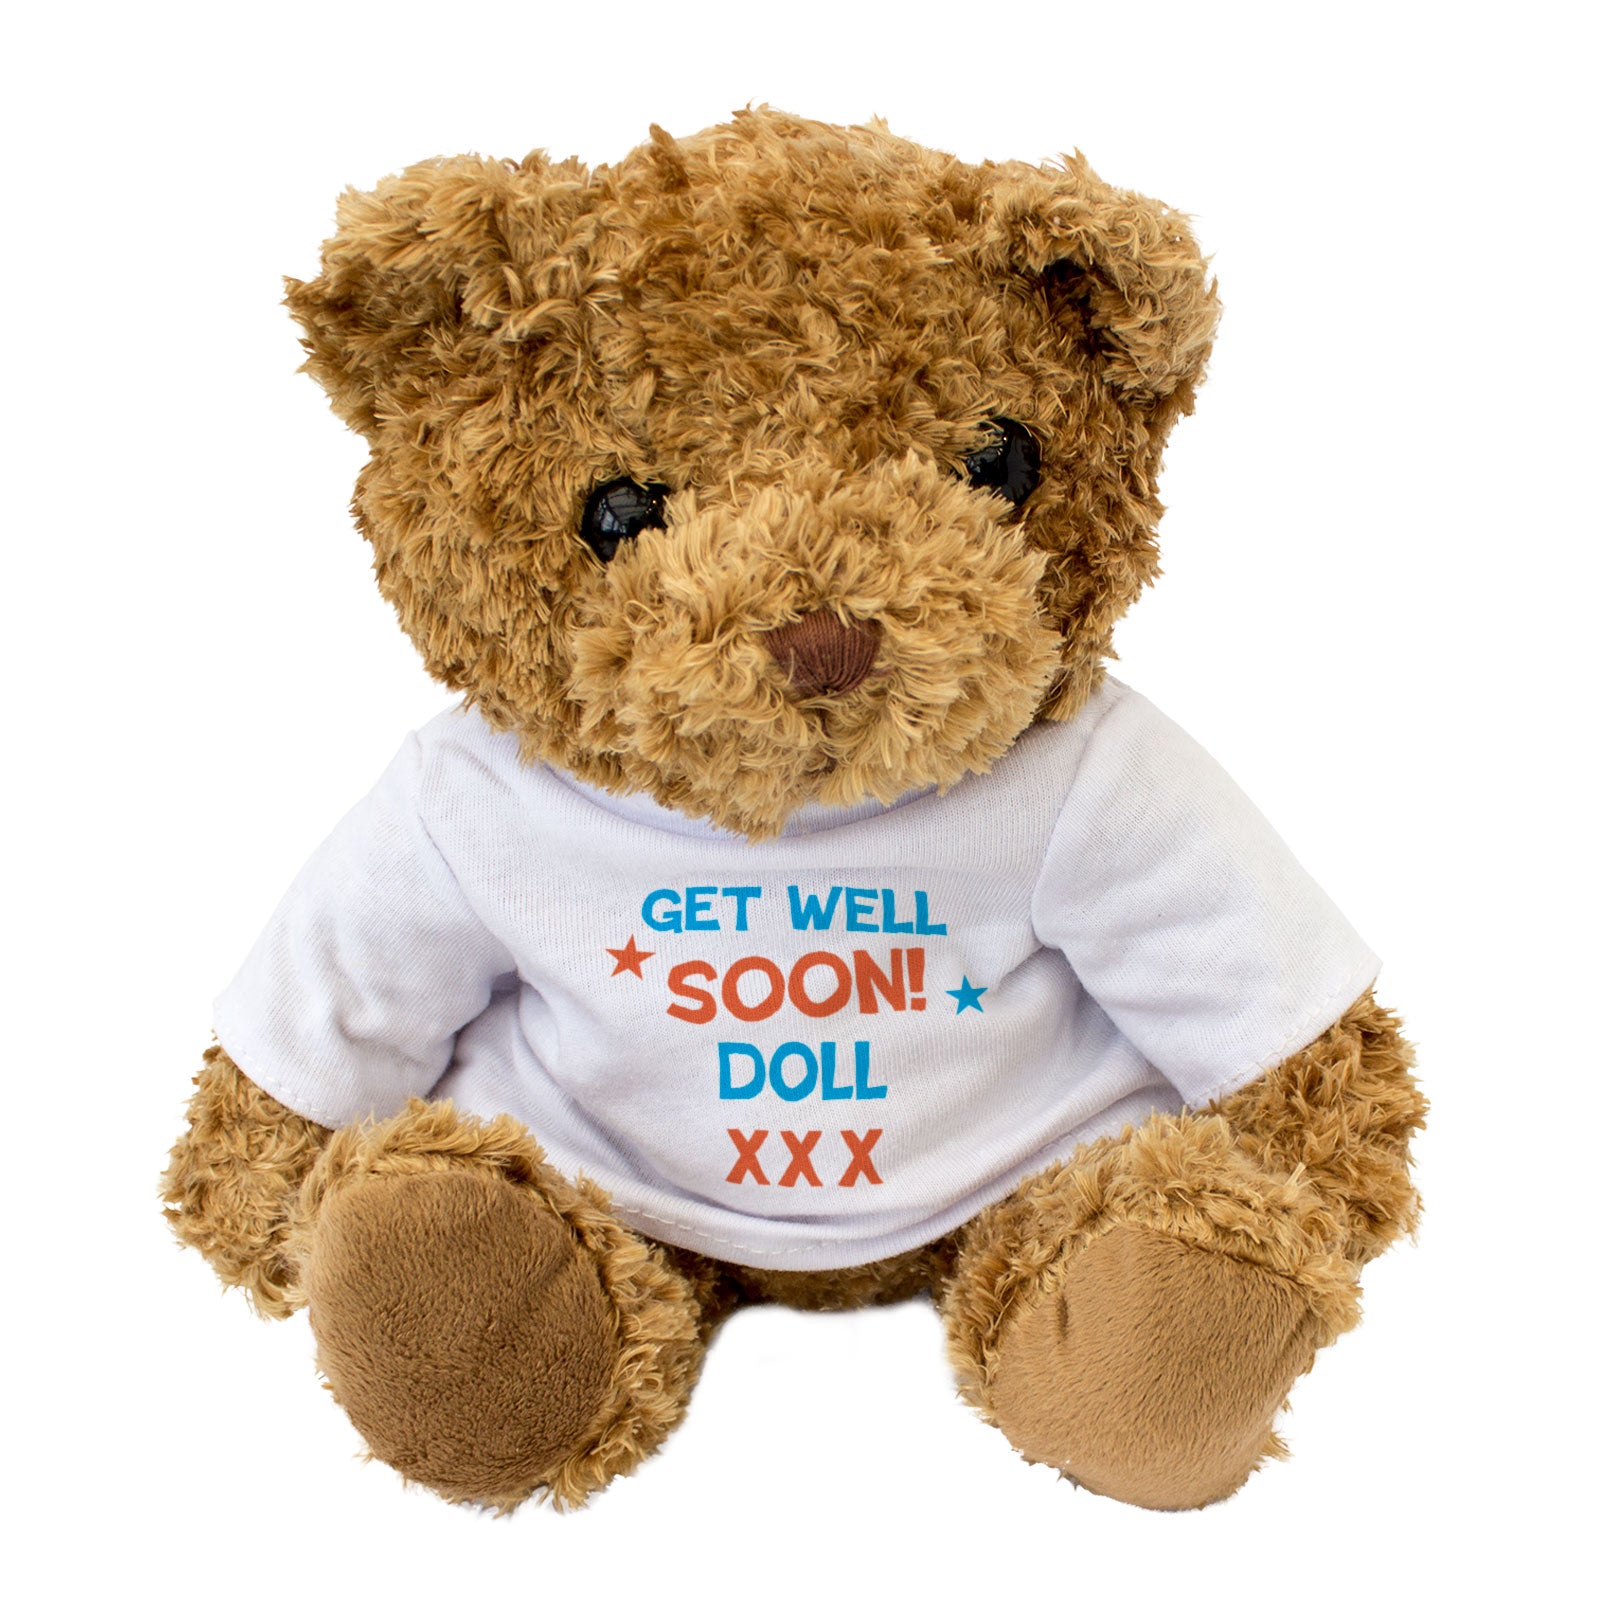 Get Well Soon Doll - Teddy Bear